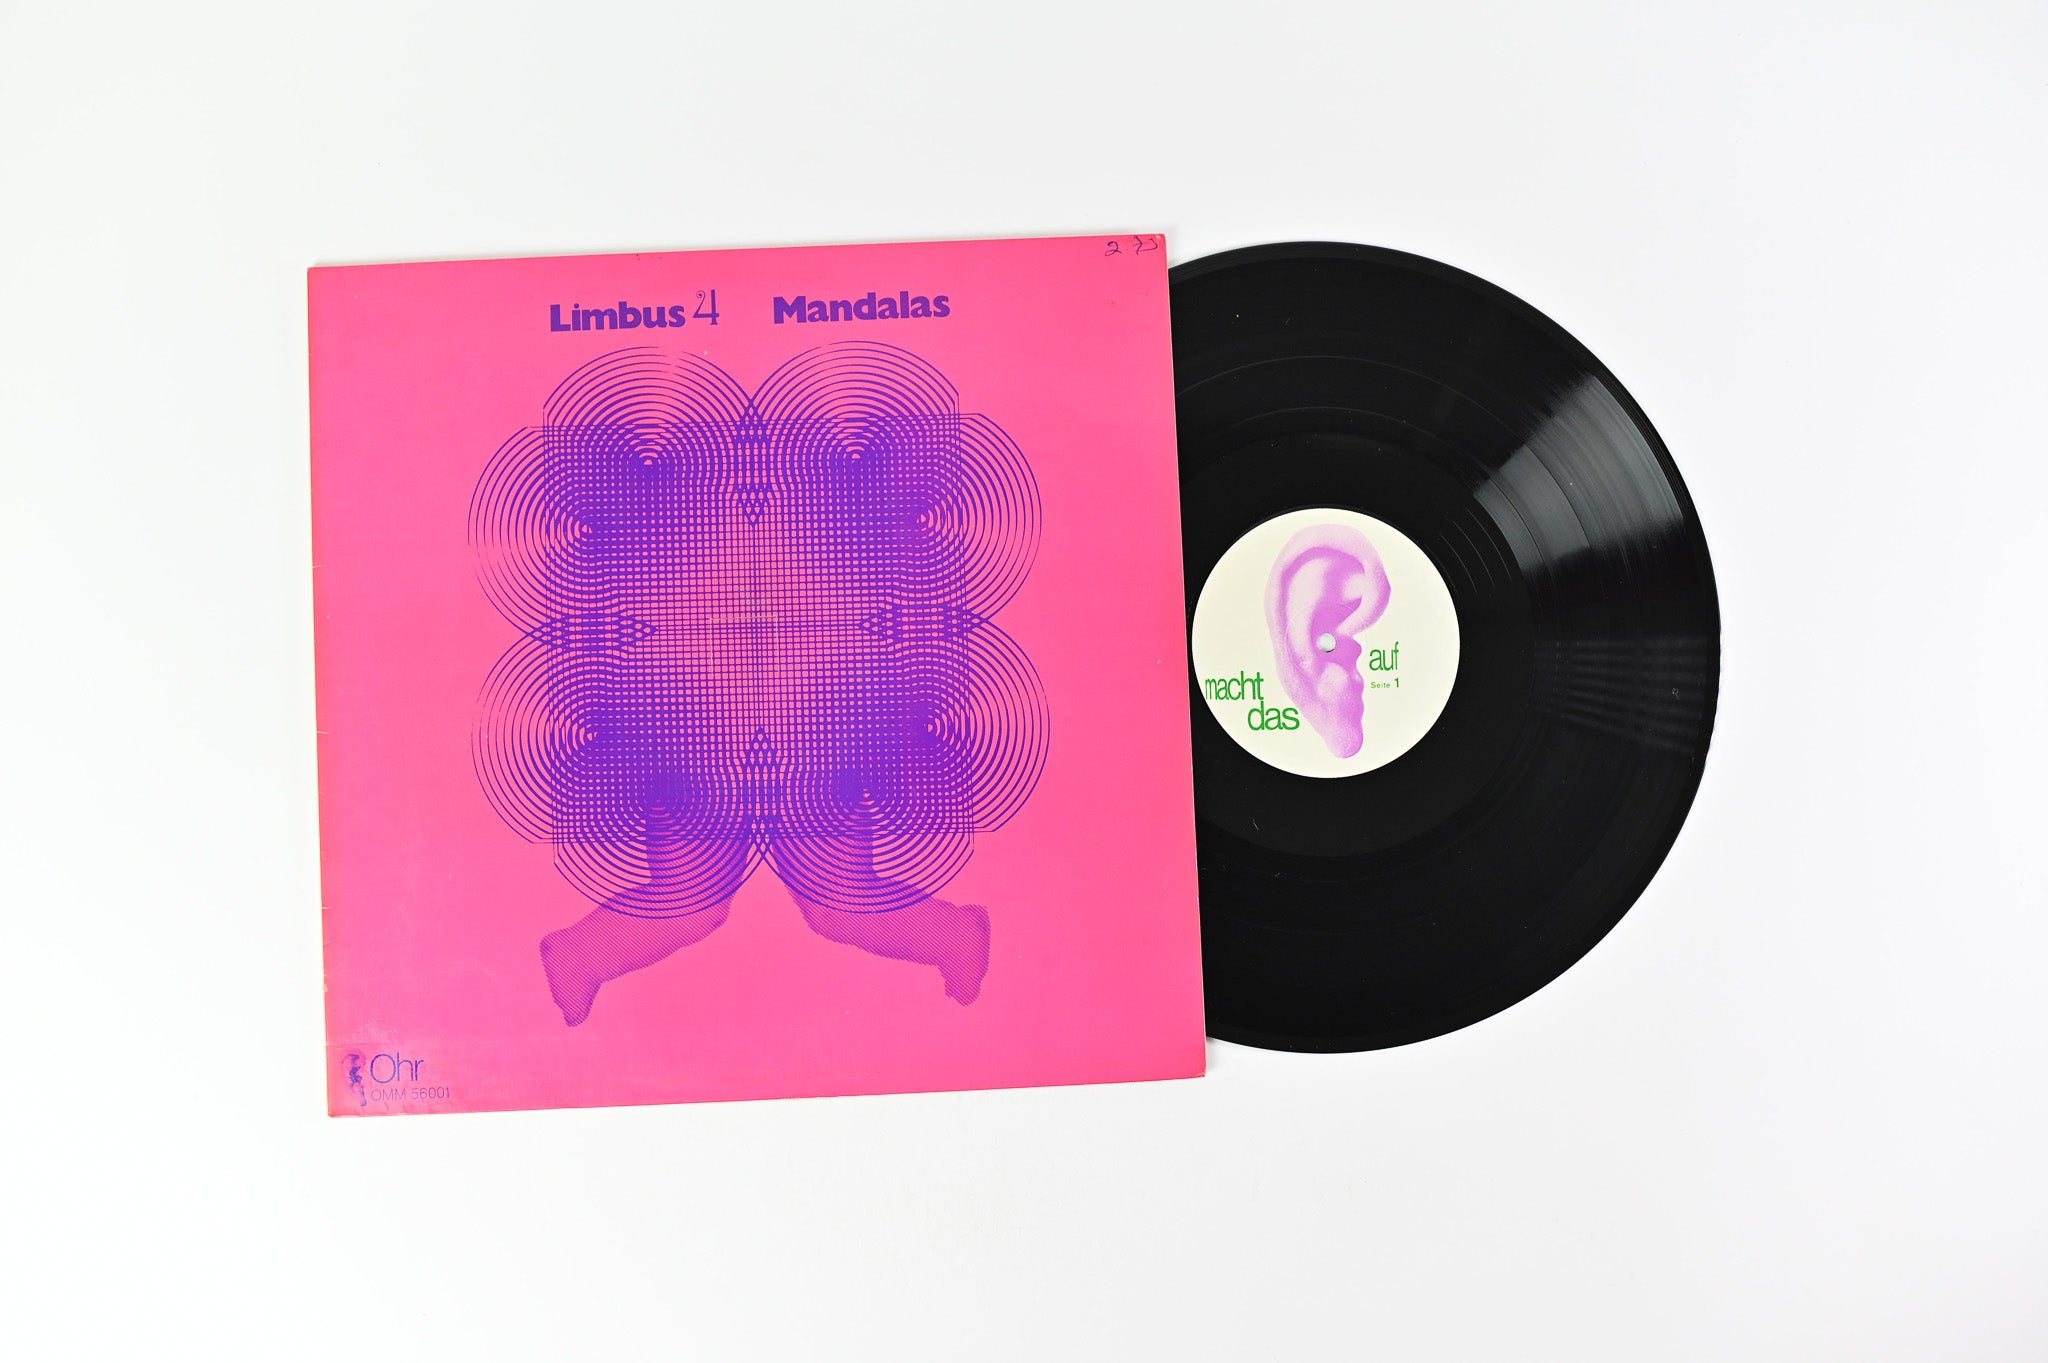 Limbus 4 - Mandalas on Ohr Original German Pressing